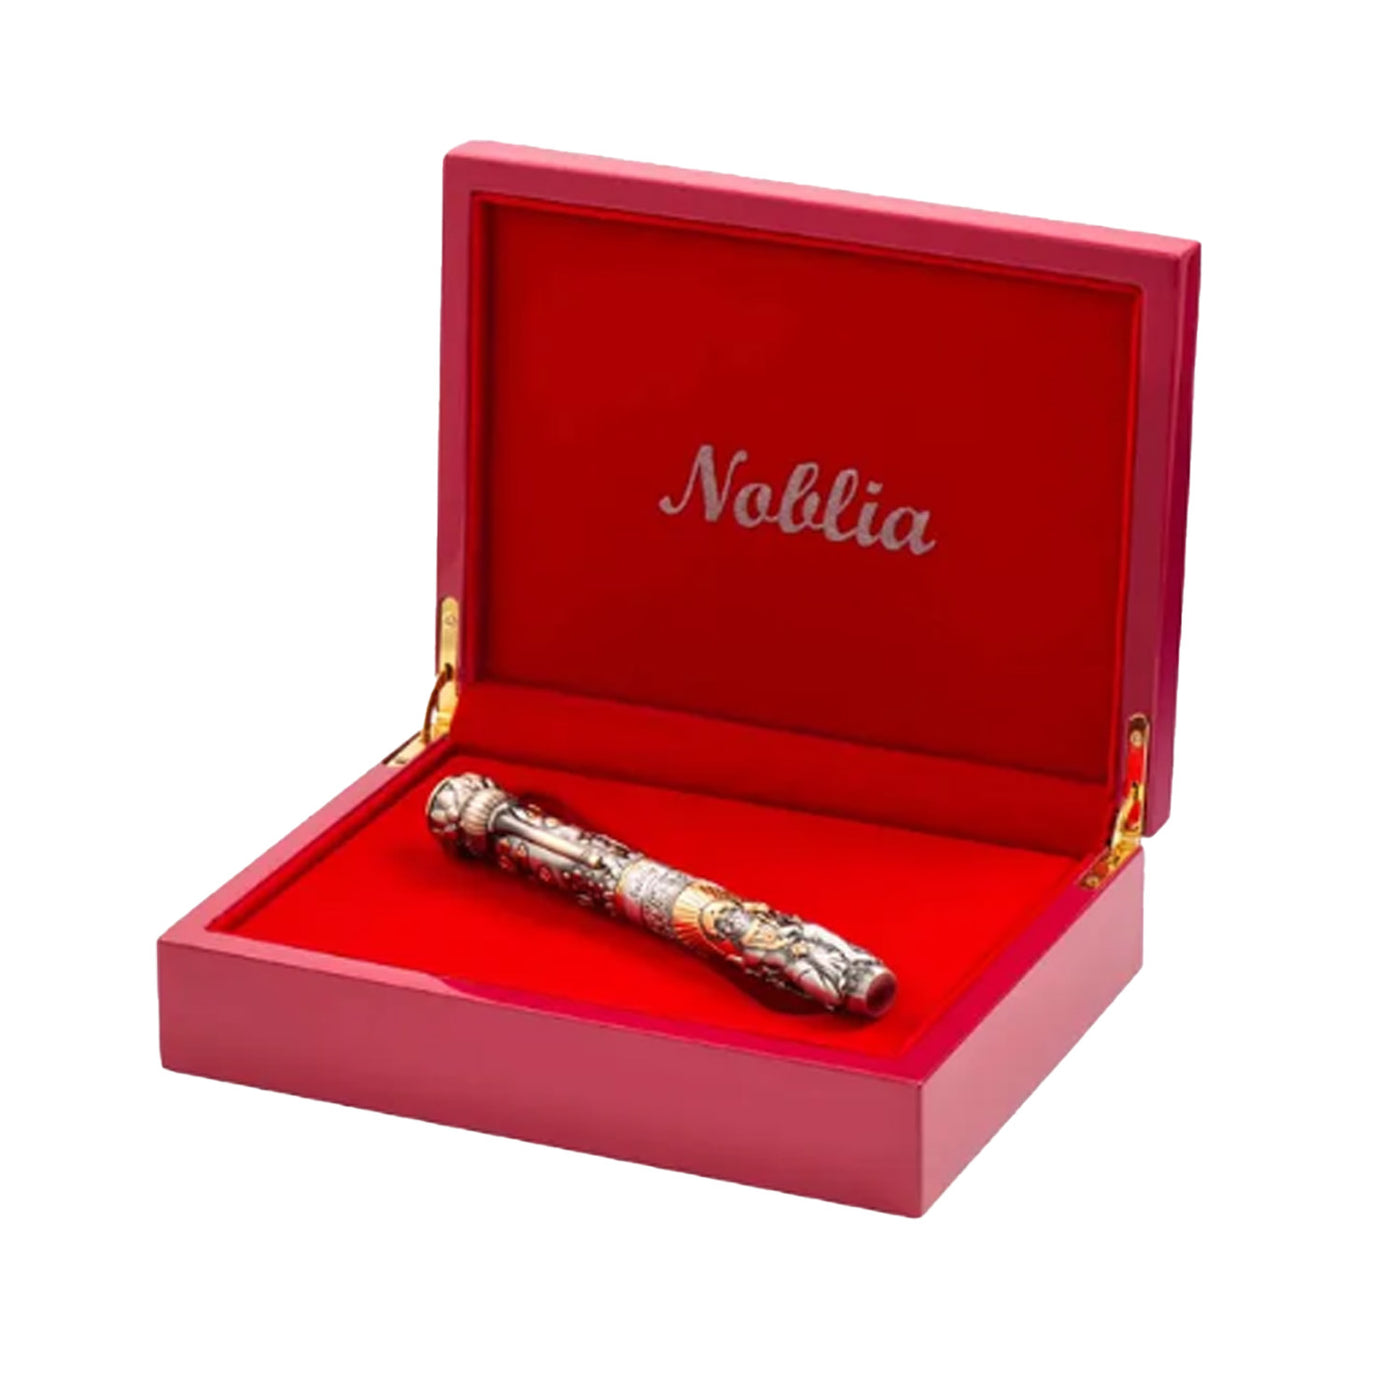 Noblia Hanuman Limited Edition Fountain Pen 10